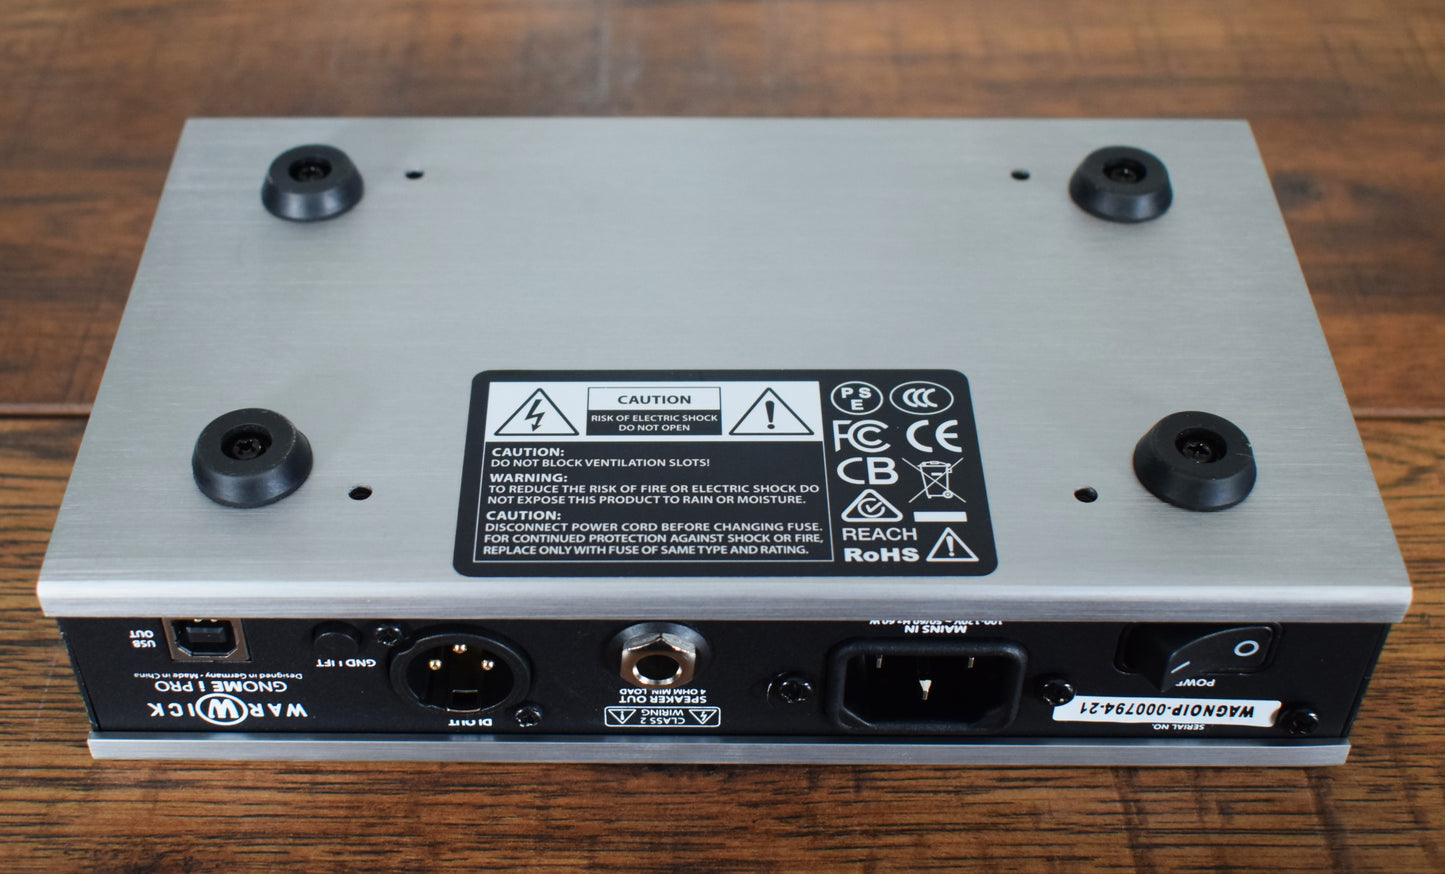 Warwick Gnome i Pro 280 Watt Pocket Bass Amplifier Head & USB Interface